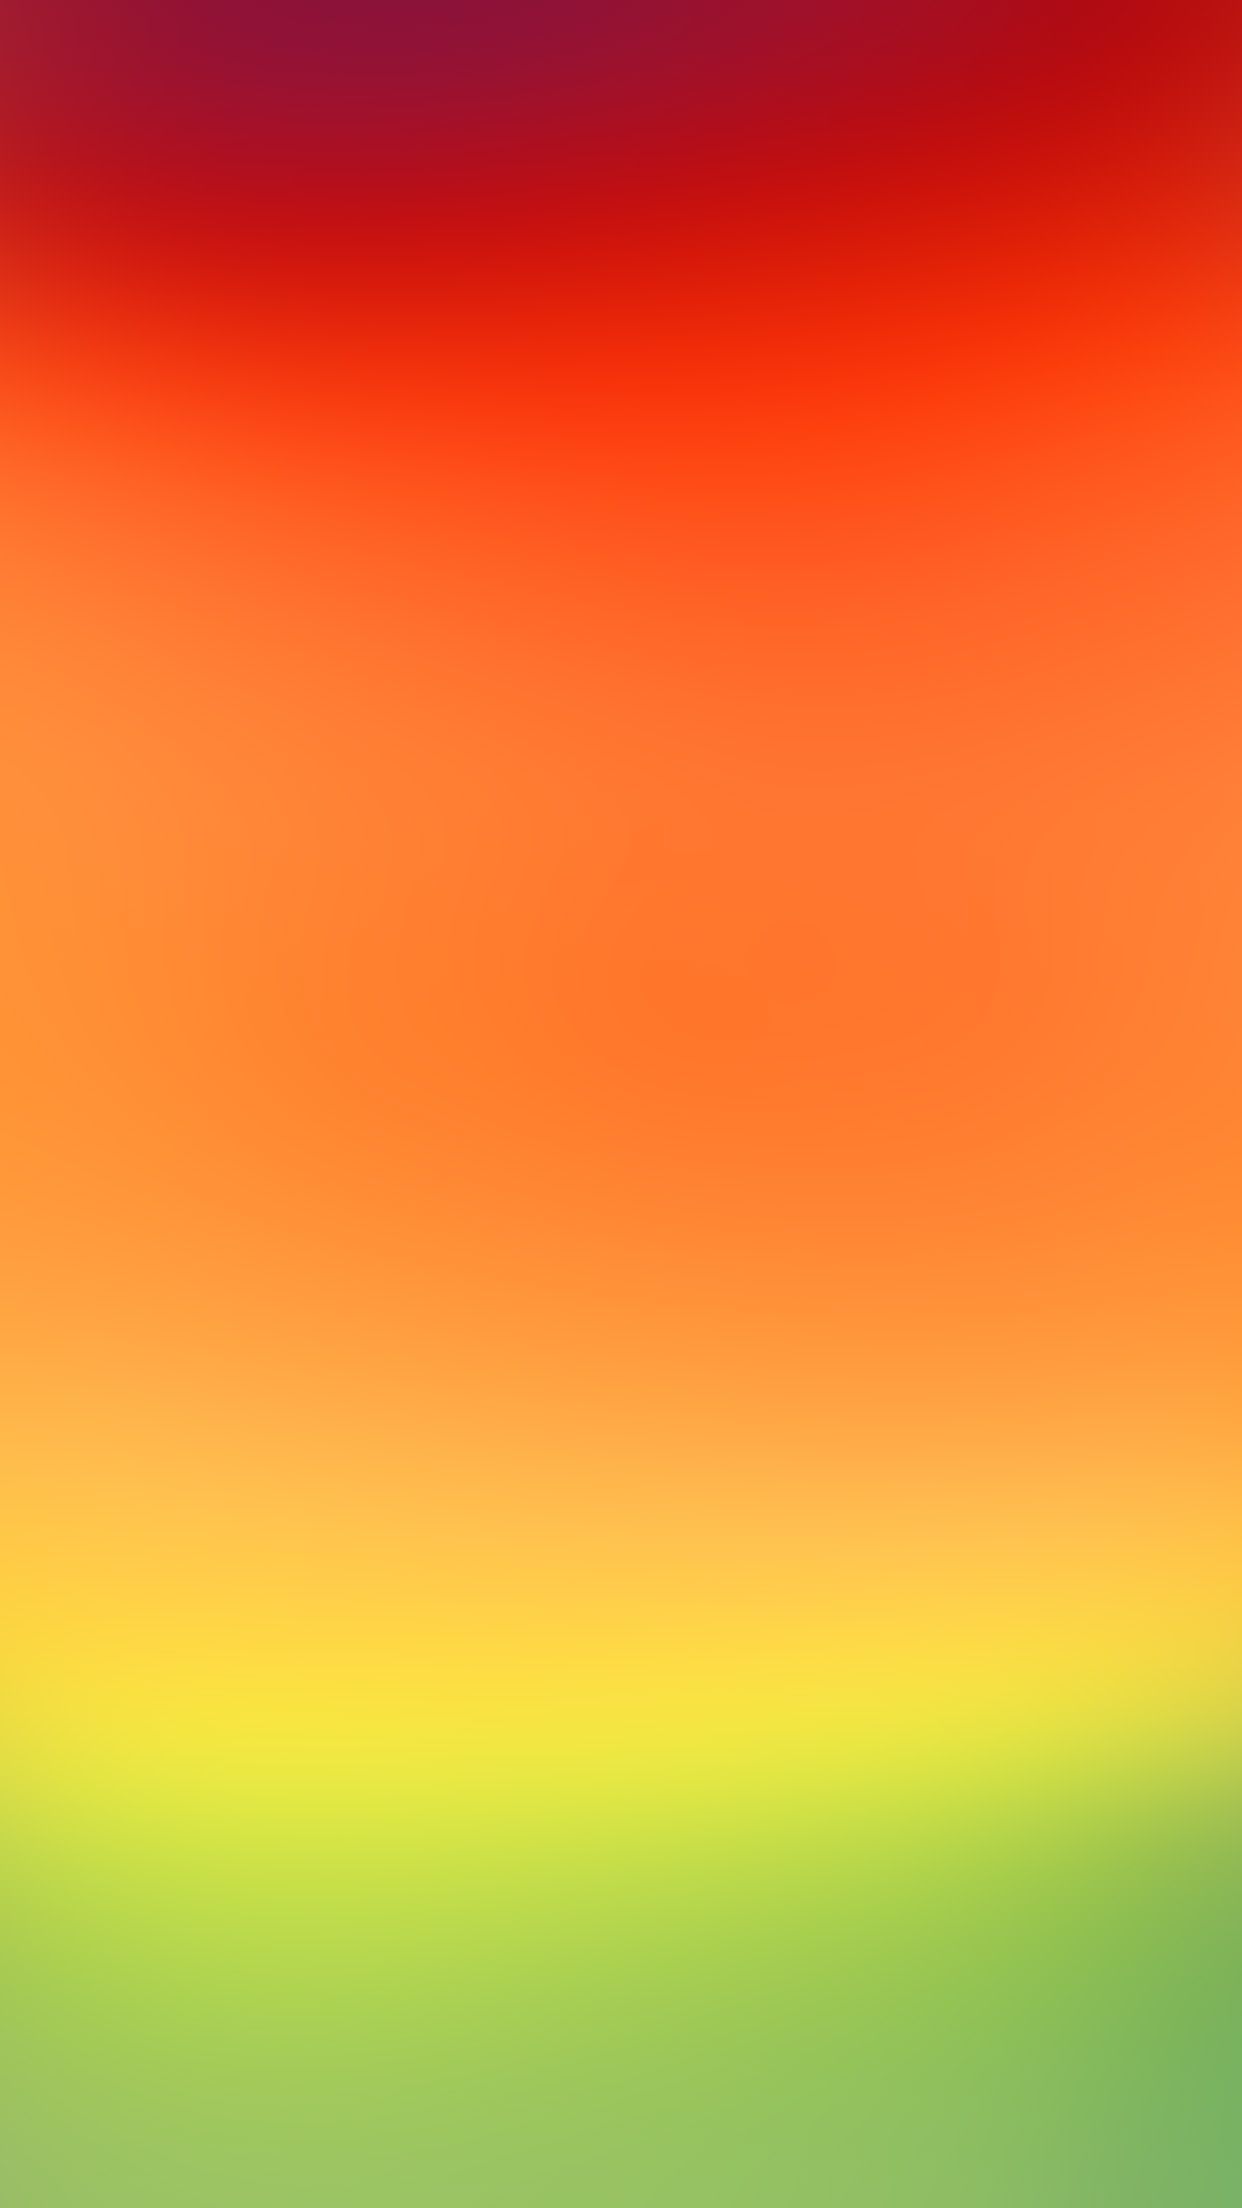 Fantastic red orange blur gradation Download Free Wallpaper for phone